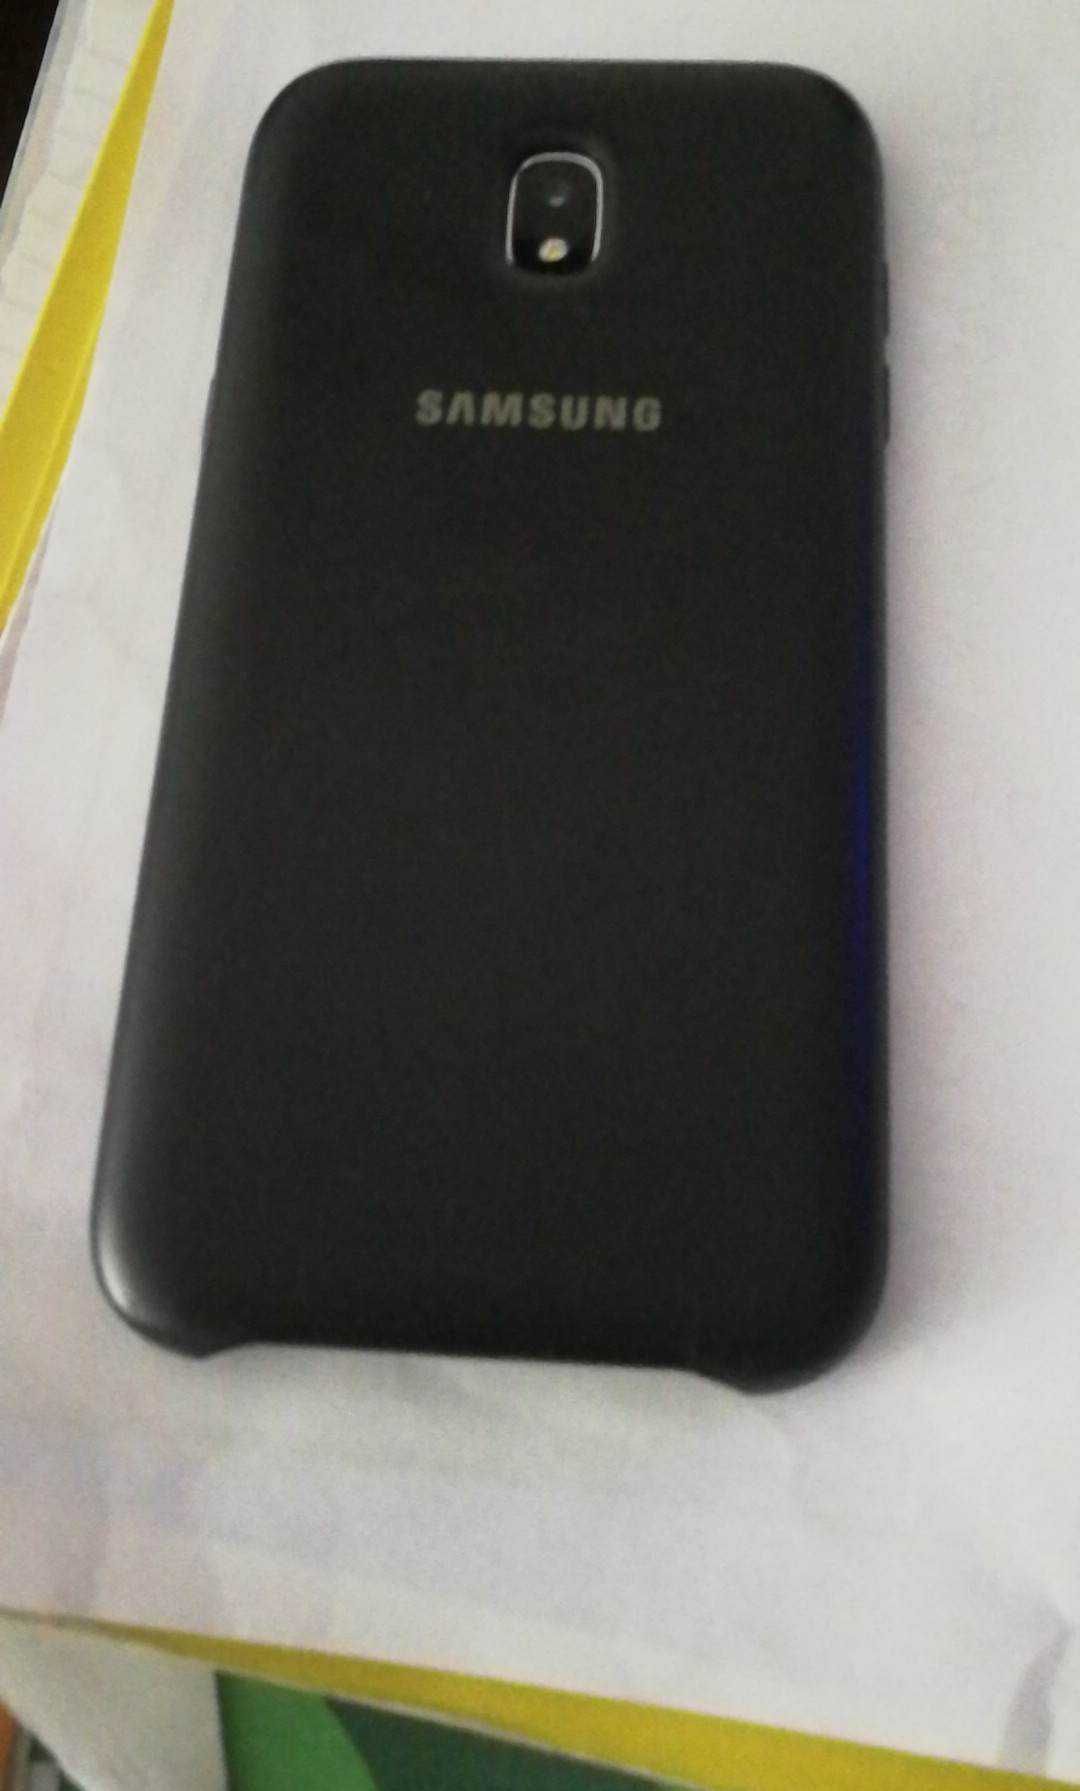 Telefoane Samsung diferite modele.